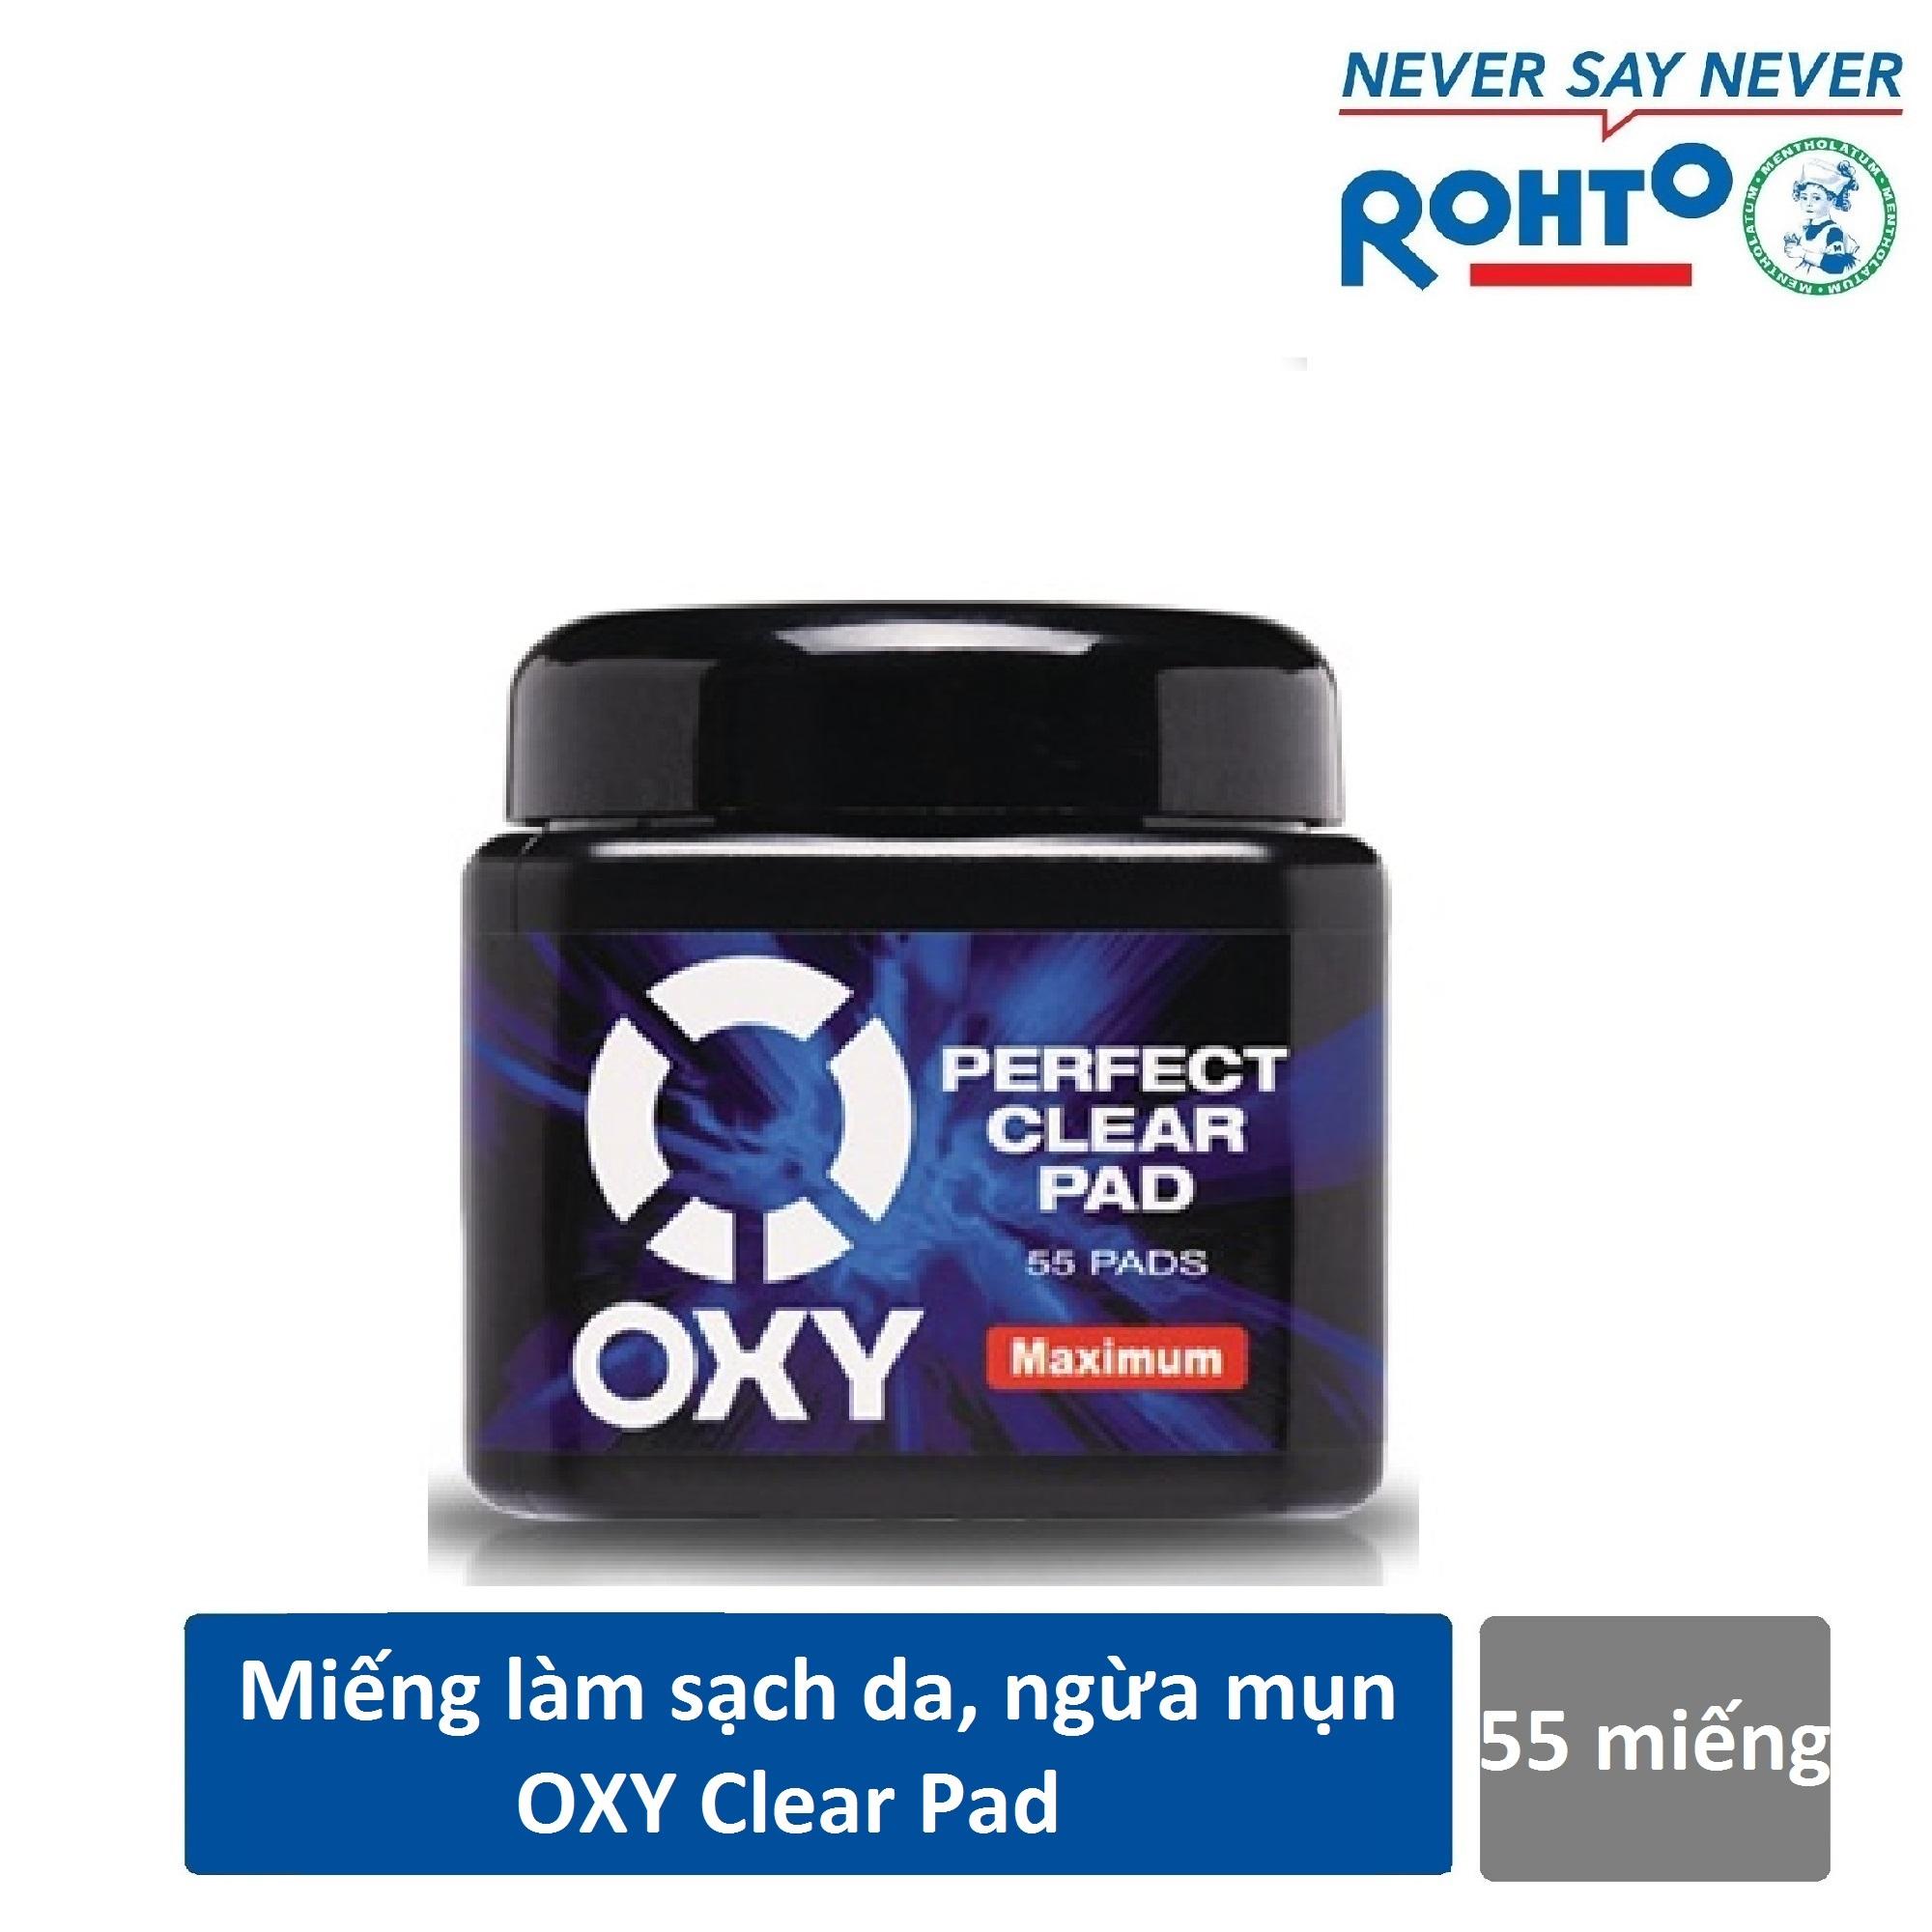 Miếng làm sạch da mặt ngăn ngừa mụn Oxy Perfect Clear Pad 55 miếng